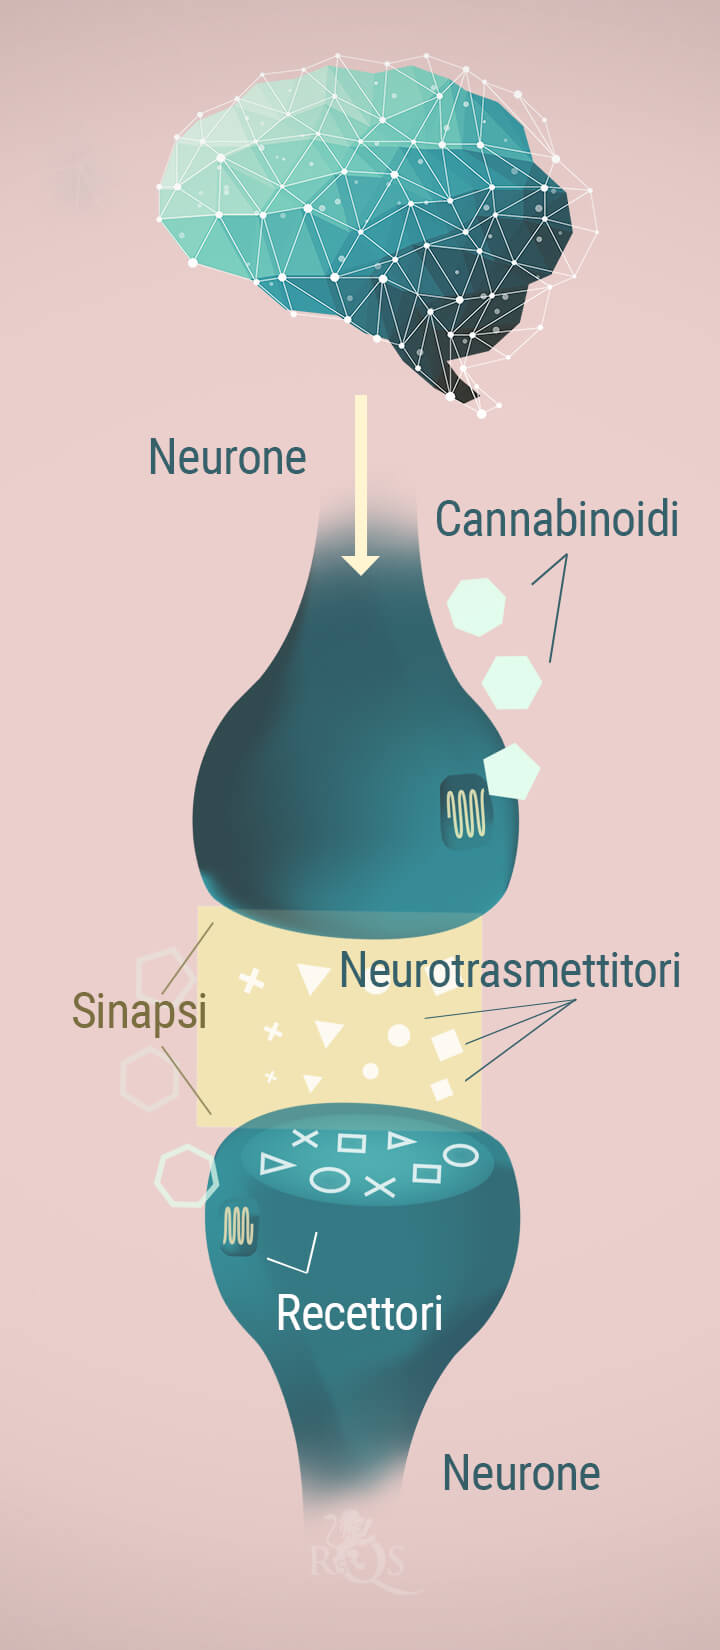 Neuroni, cannabinoidi e neurotrasmettitori